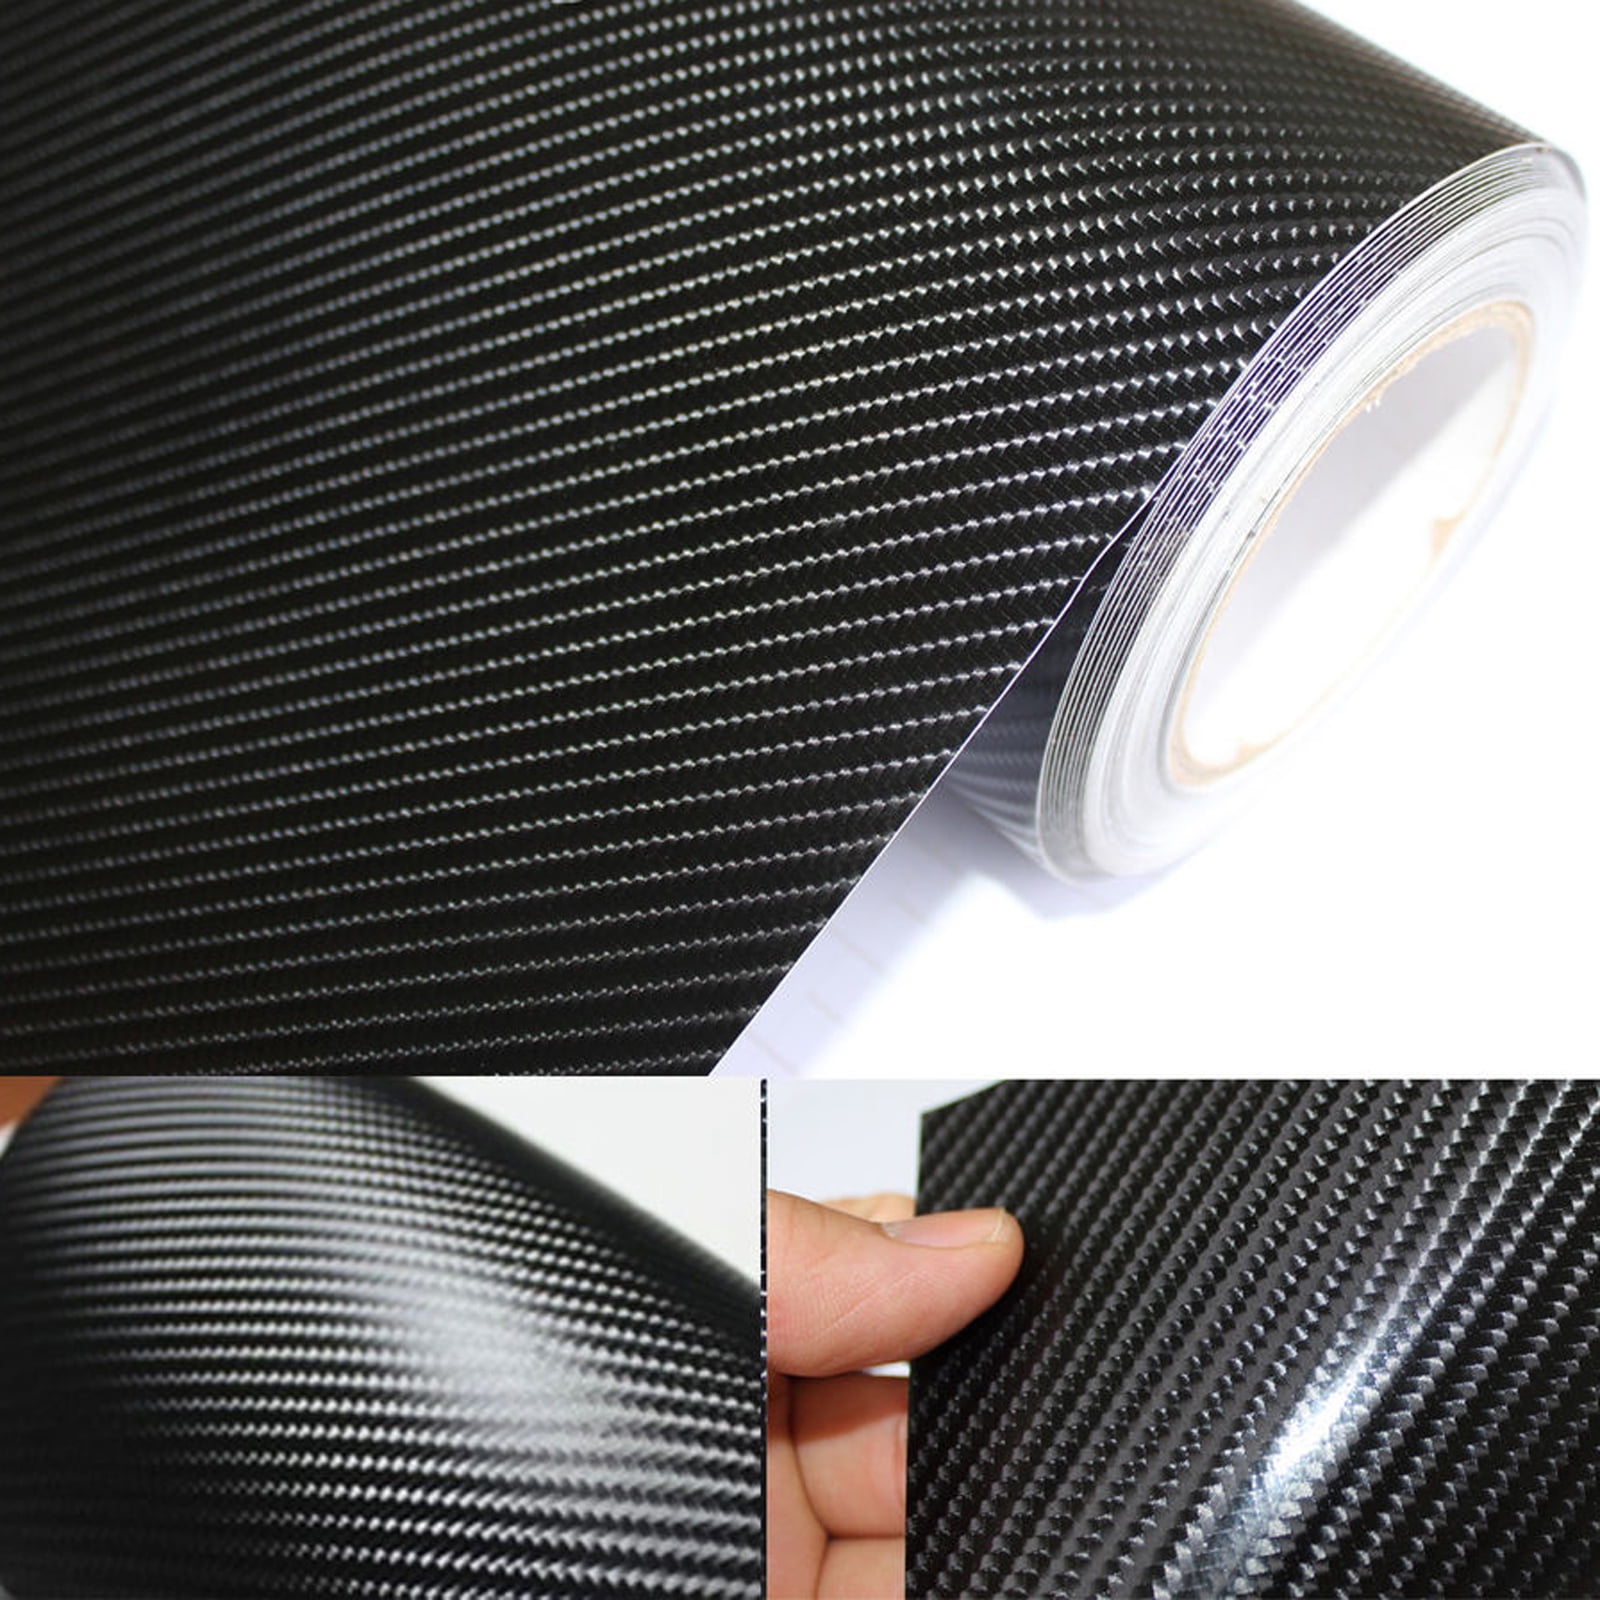 Premium Gloss Black Vinyl Wrap Roll Bubble Free Air Release - 480x60  (40ft x 5ft)